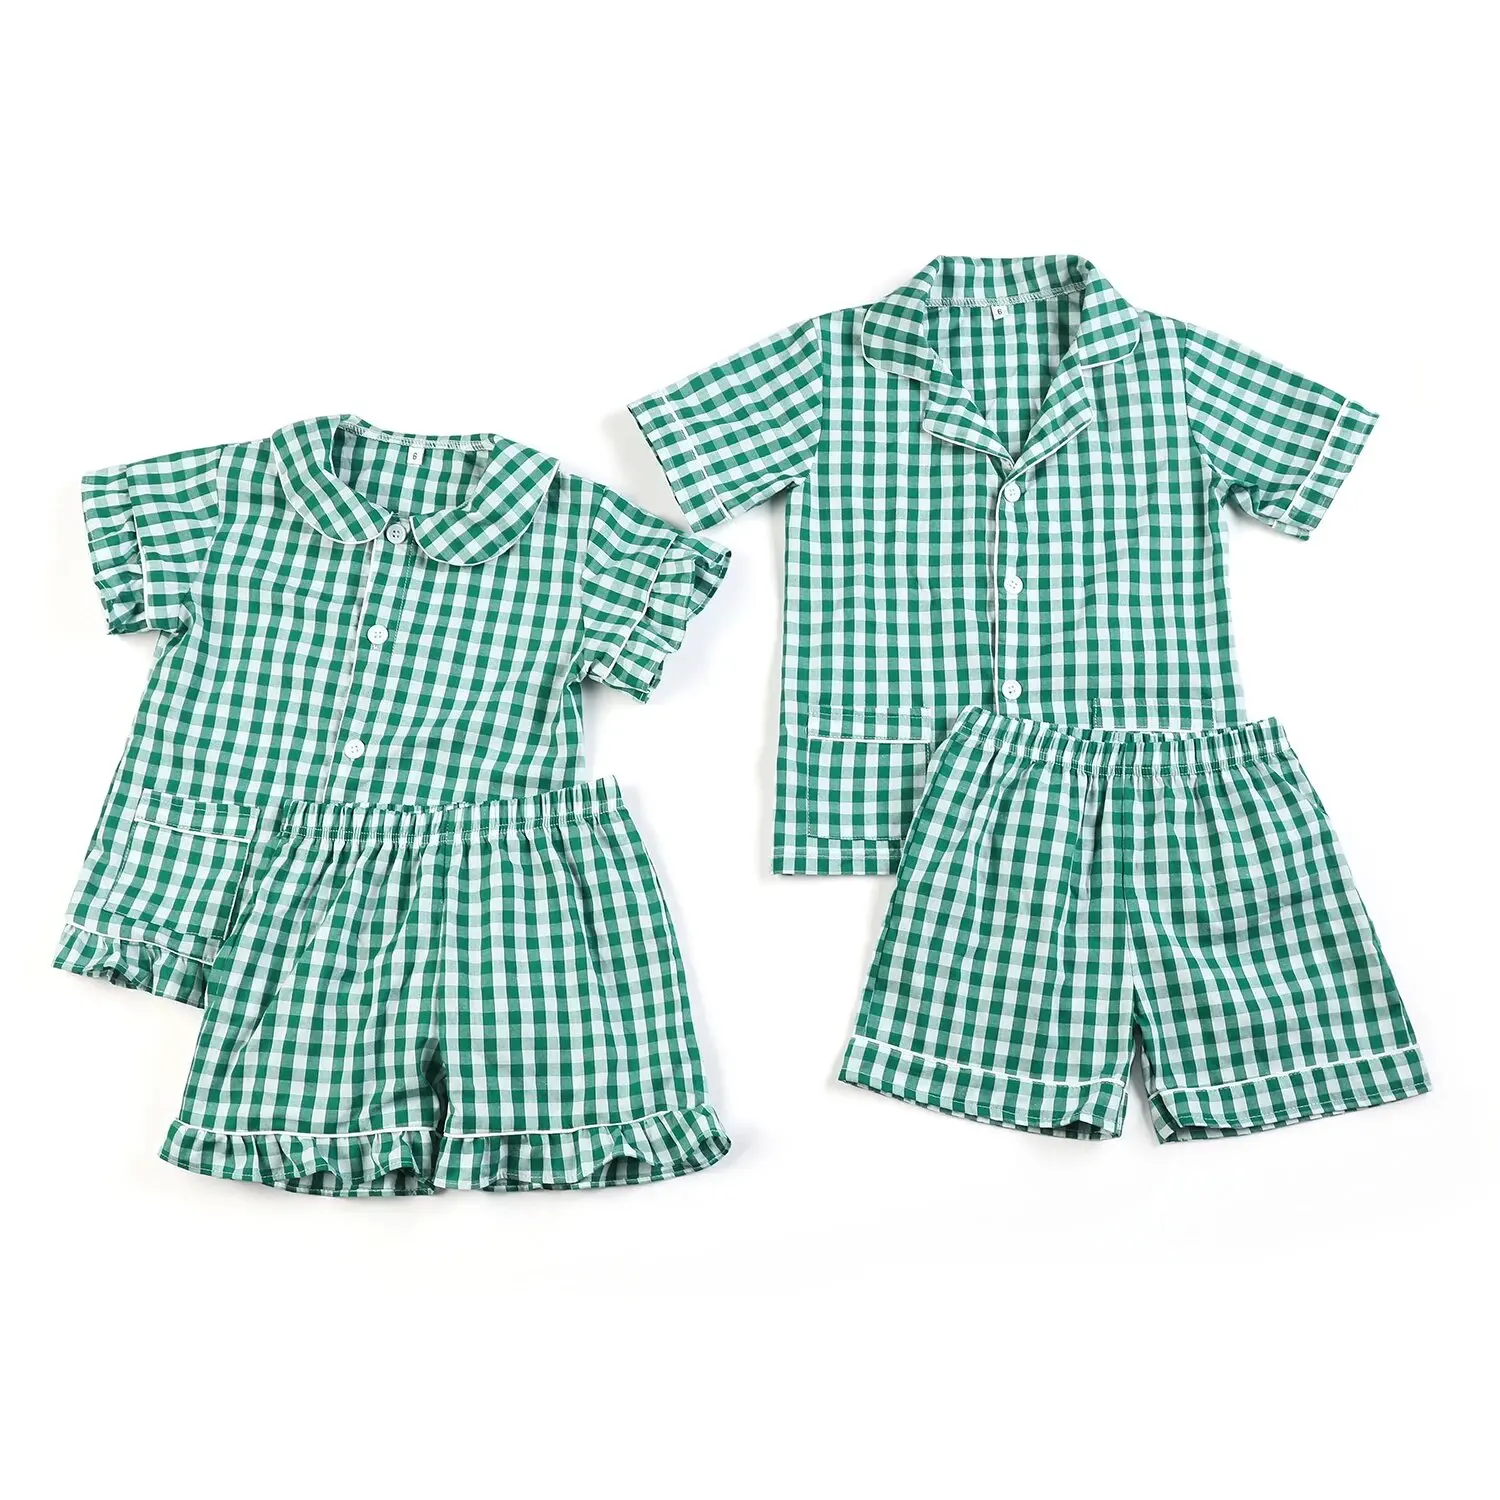 Wholesale 1-12 Years Kids Pyjamas 100% Cotton Plaid Seersucker Soft Sibling Outfits Pjs Loungewear Baby Boys Girls Pajamas Sets images - 6